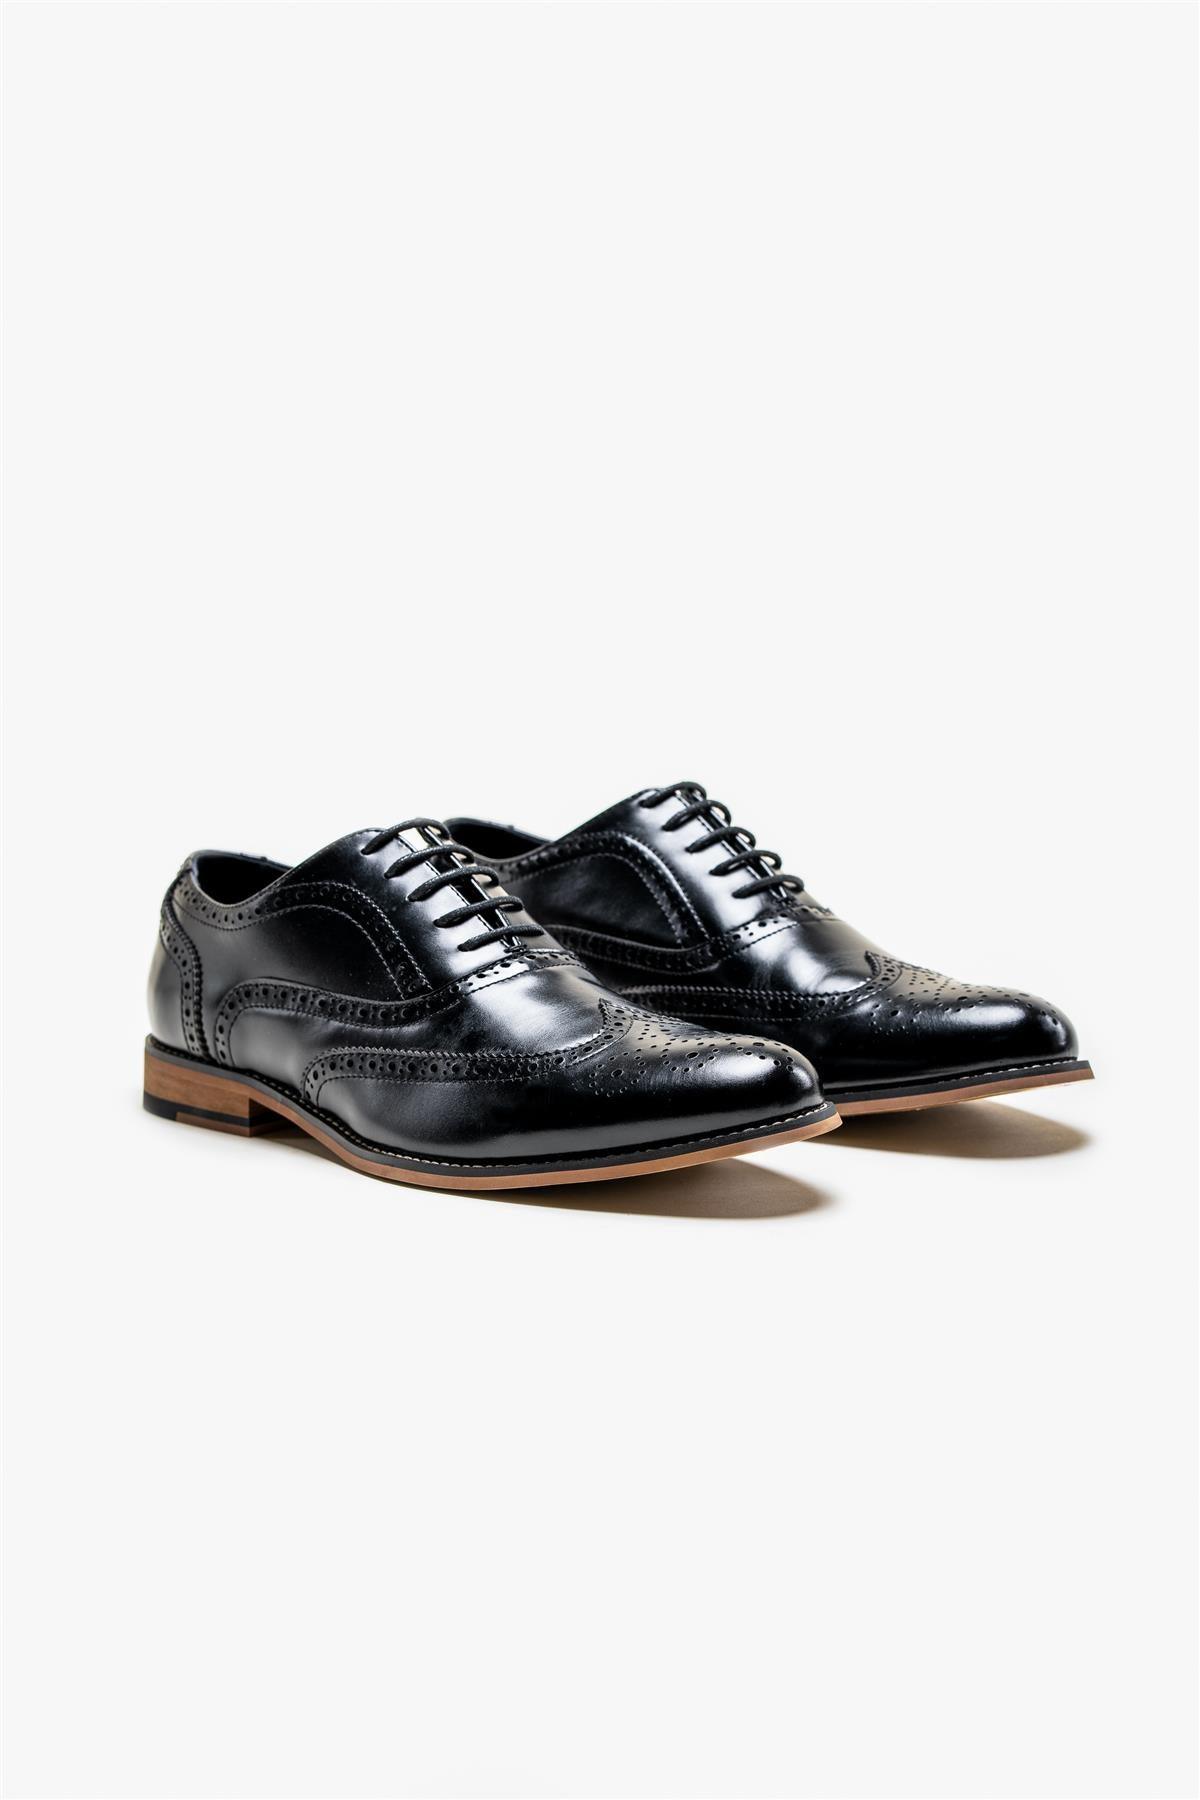 Oxford brogue black shoe front